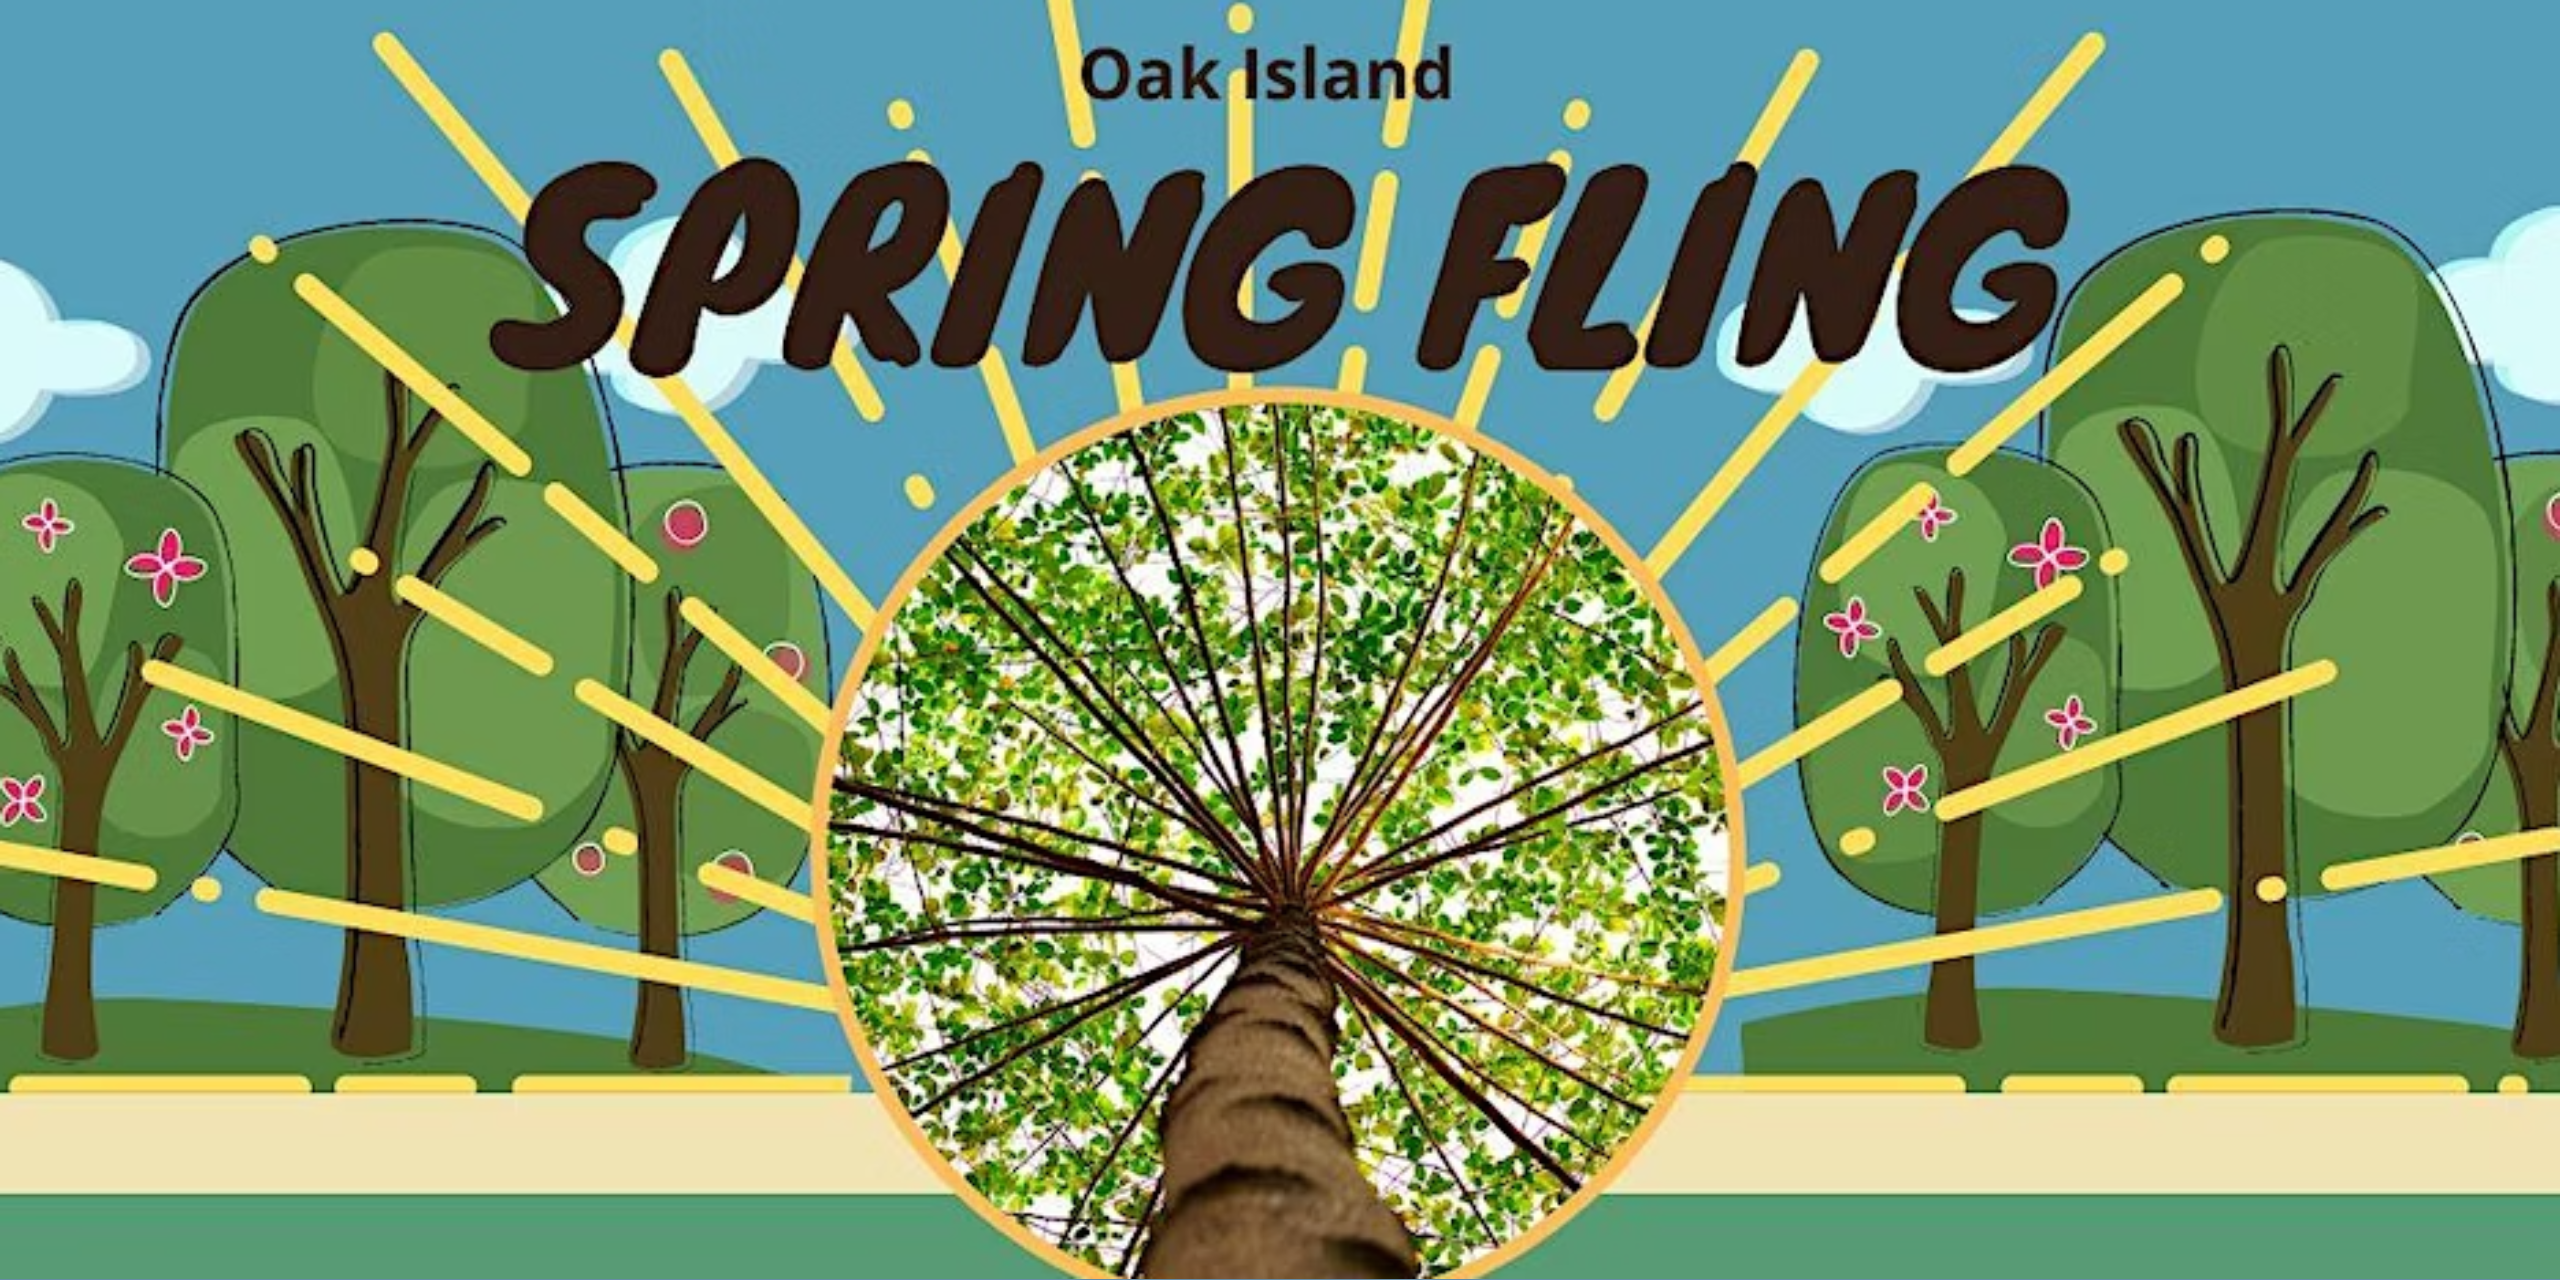 Cartoon trees with text "Oak Island Spring Fling